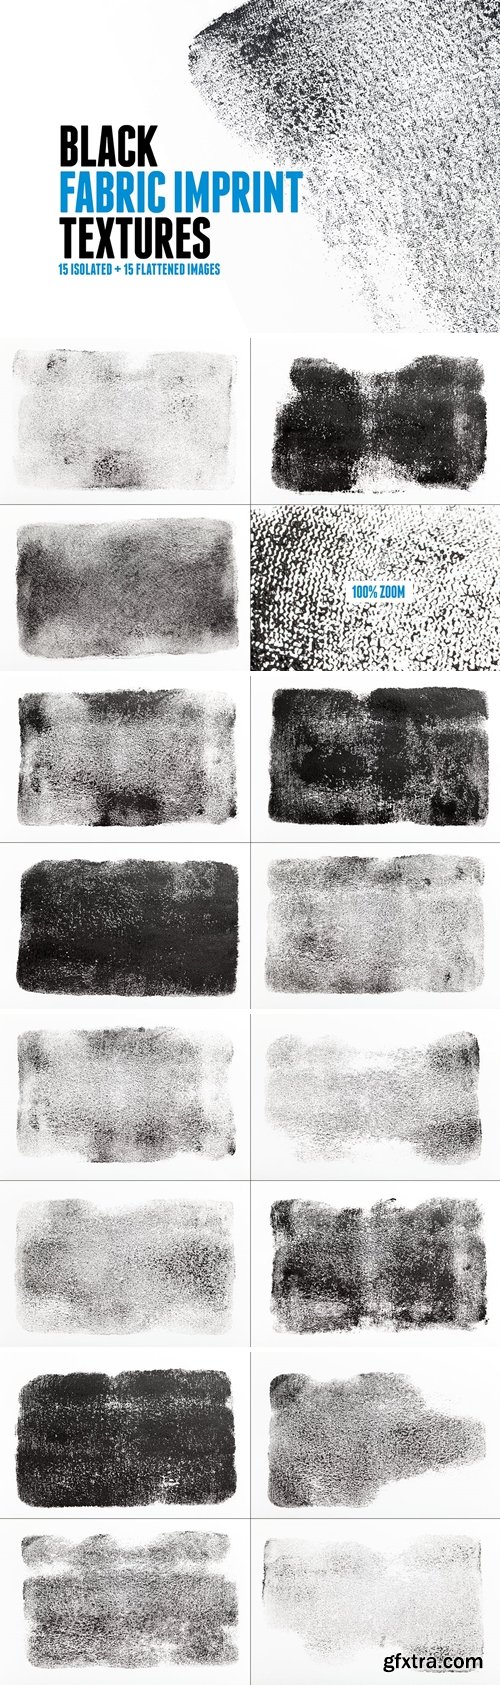 15 Black Fabric Imprint Textures